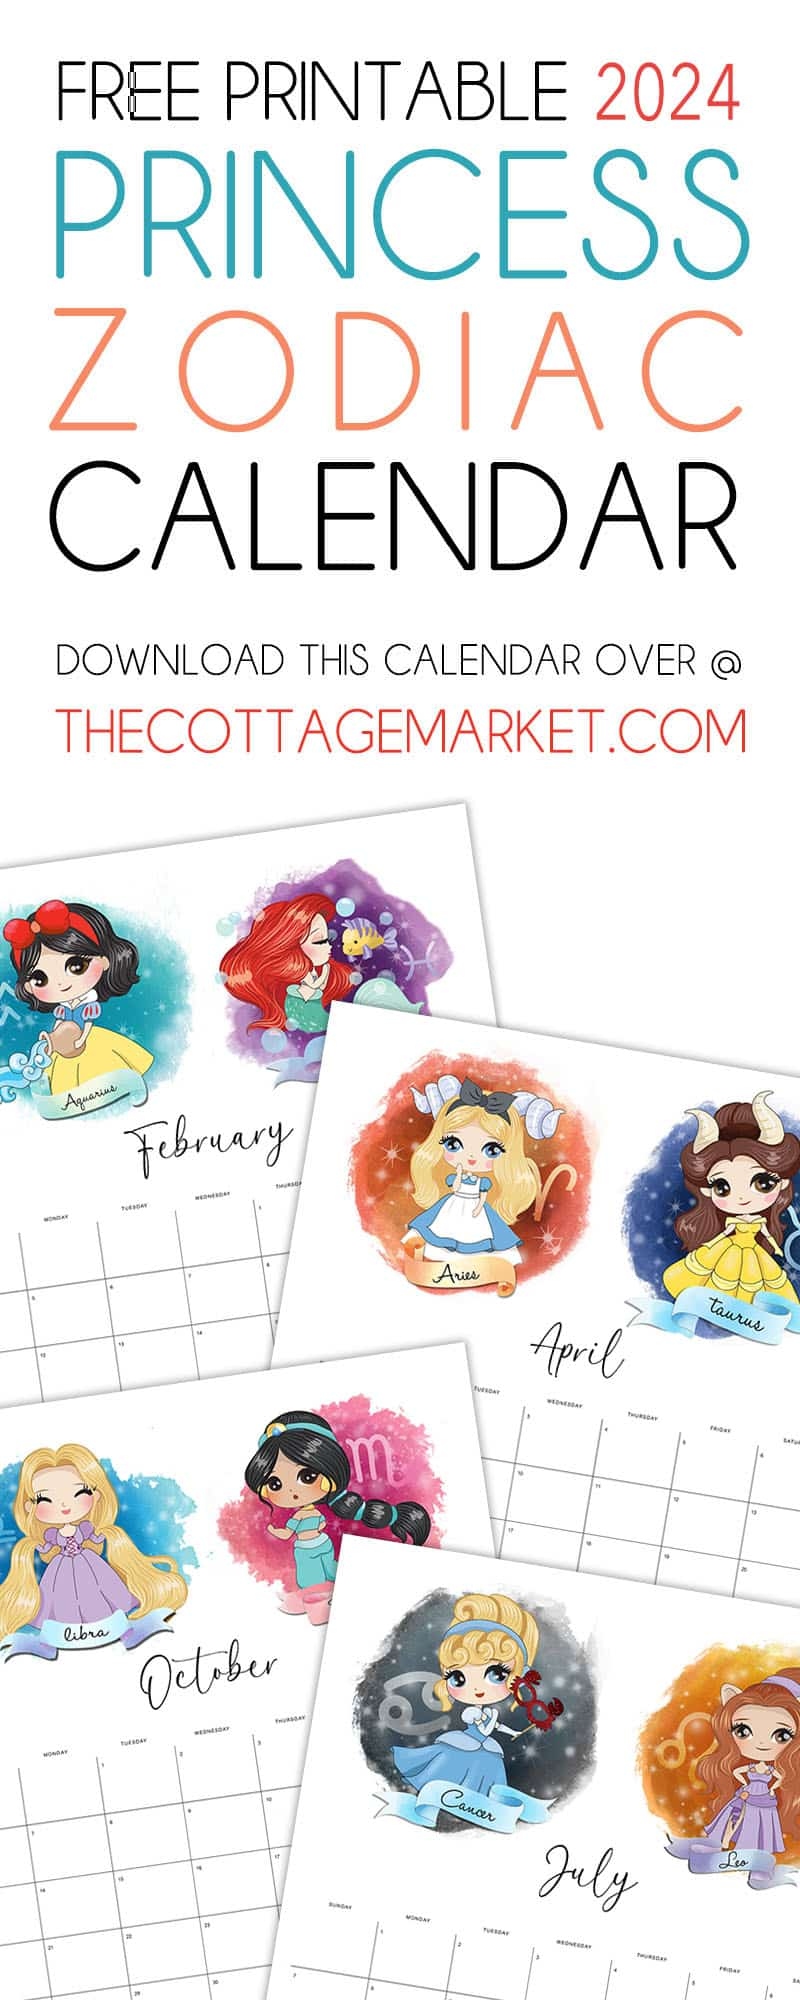 Free Printable 2024 Princess Zodiac Calendar - The Cottage Market intended for Free Printable Calendar 2024 Disney